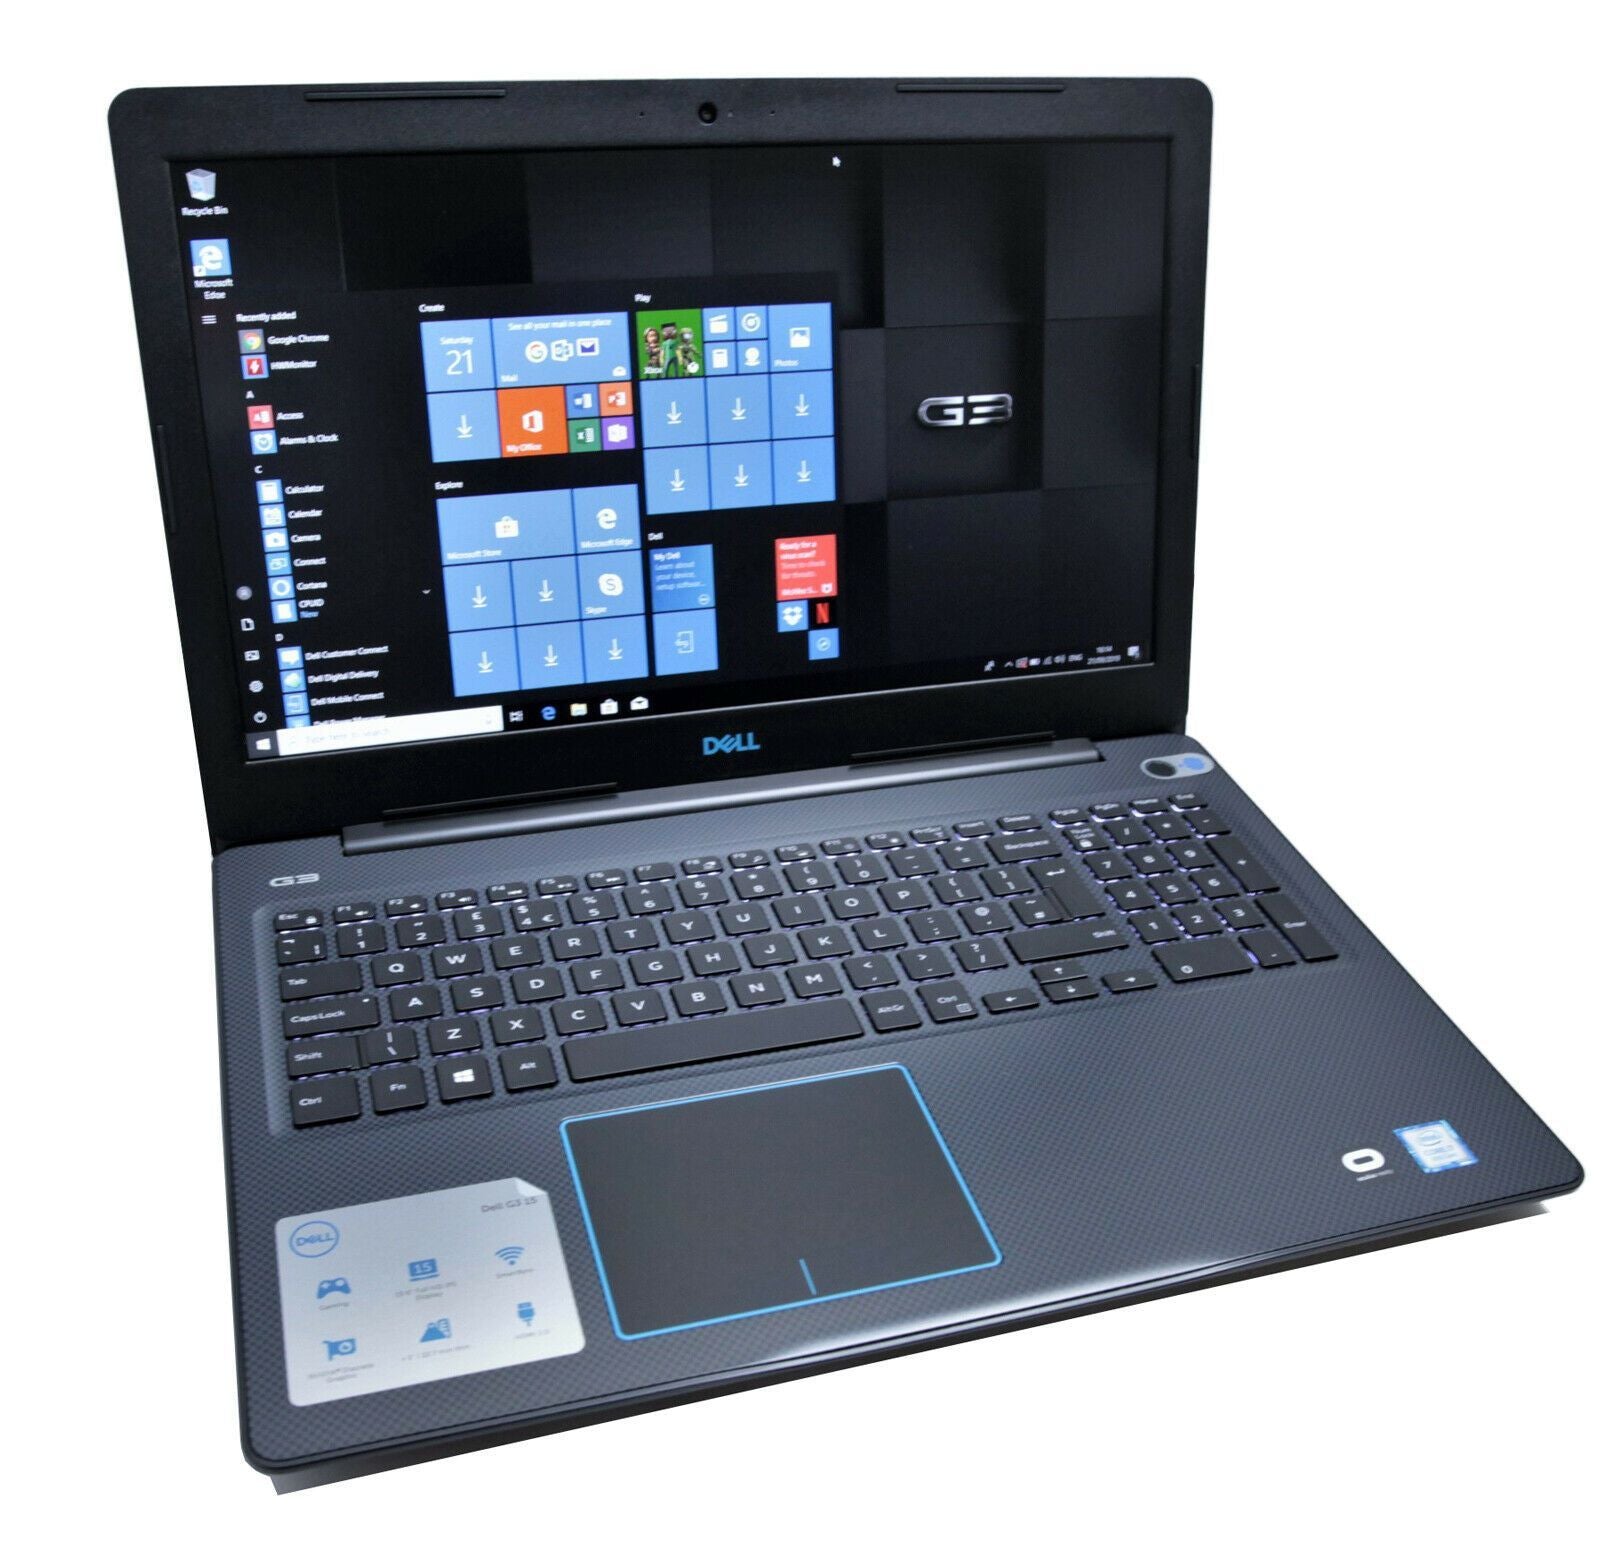 Dell G3 15 IPS Gaming Laptop: Core i7-8750H, GTX 1060 Max-Q, 128GB+1TB, 8GB RAM - CruiseTech